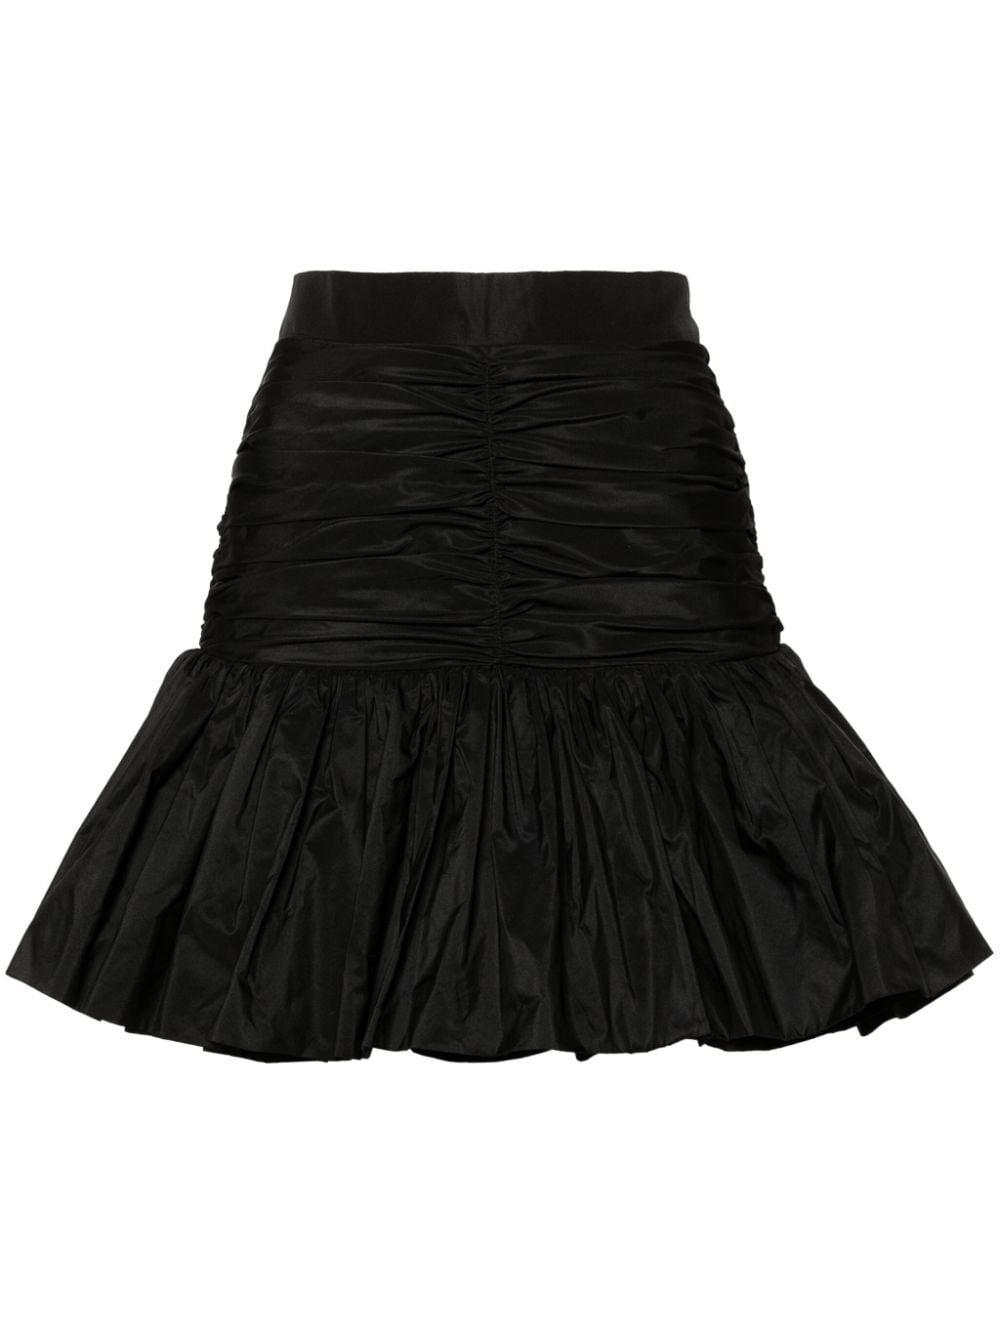 Black faille skirt